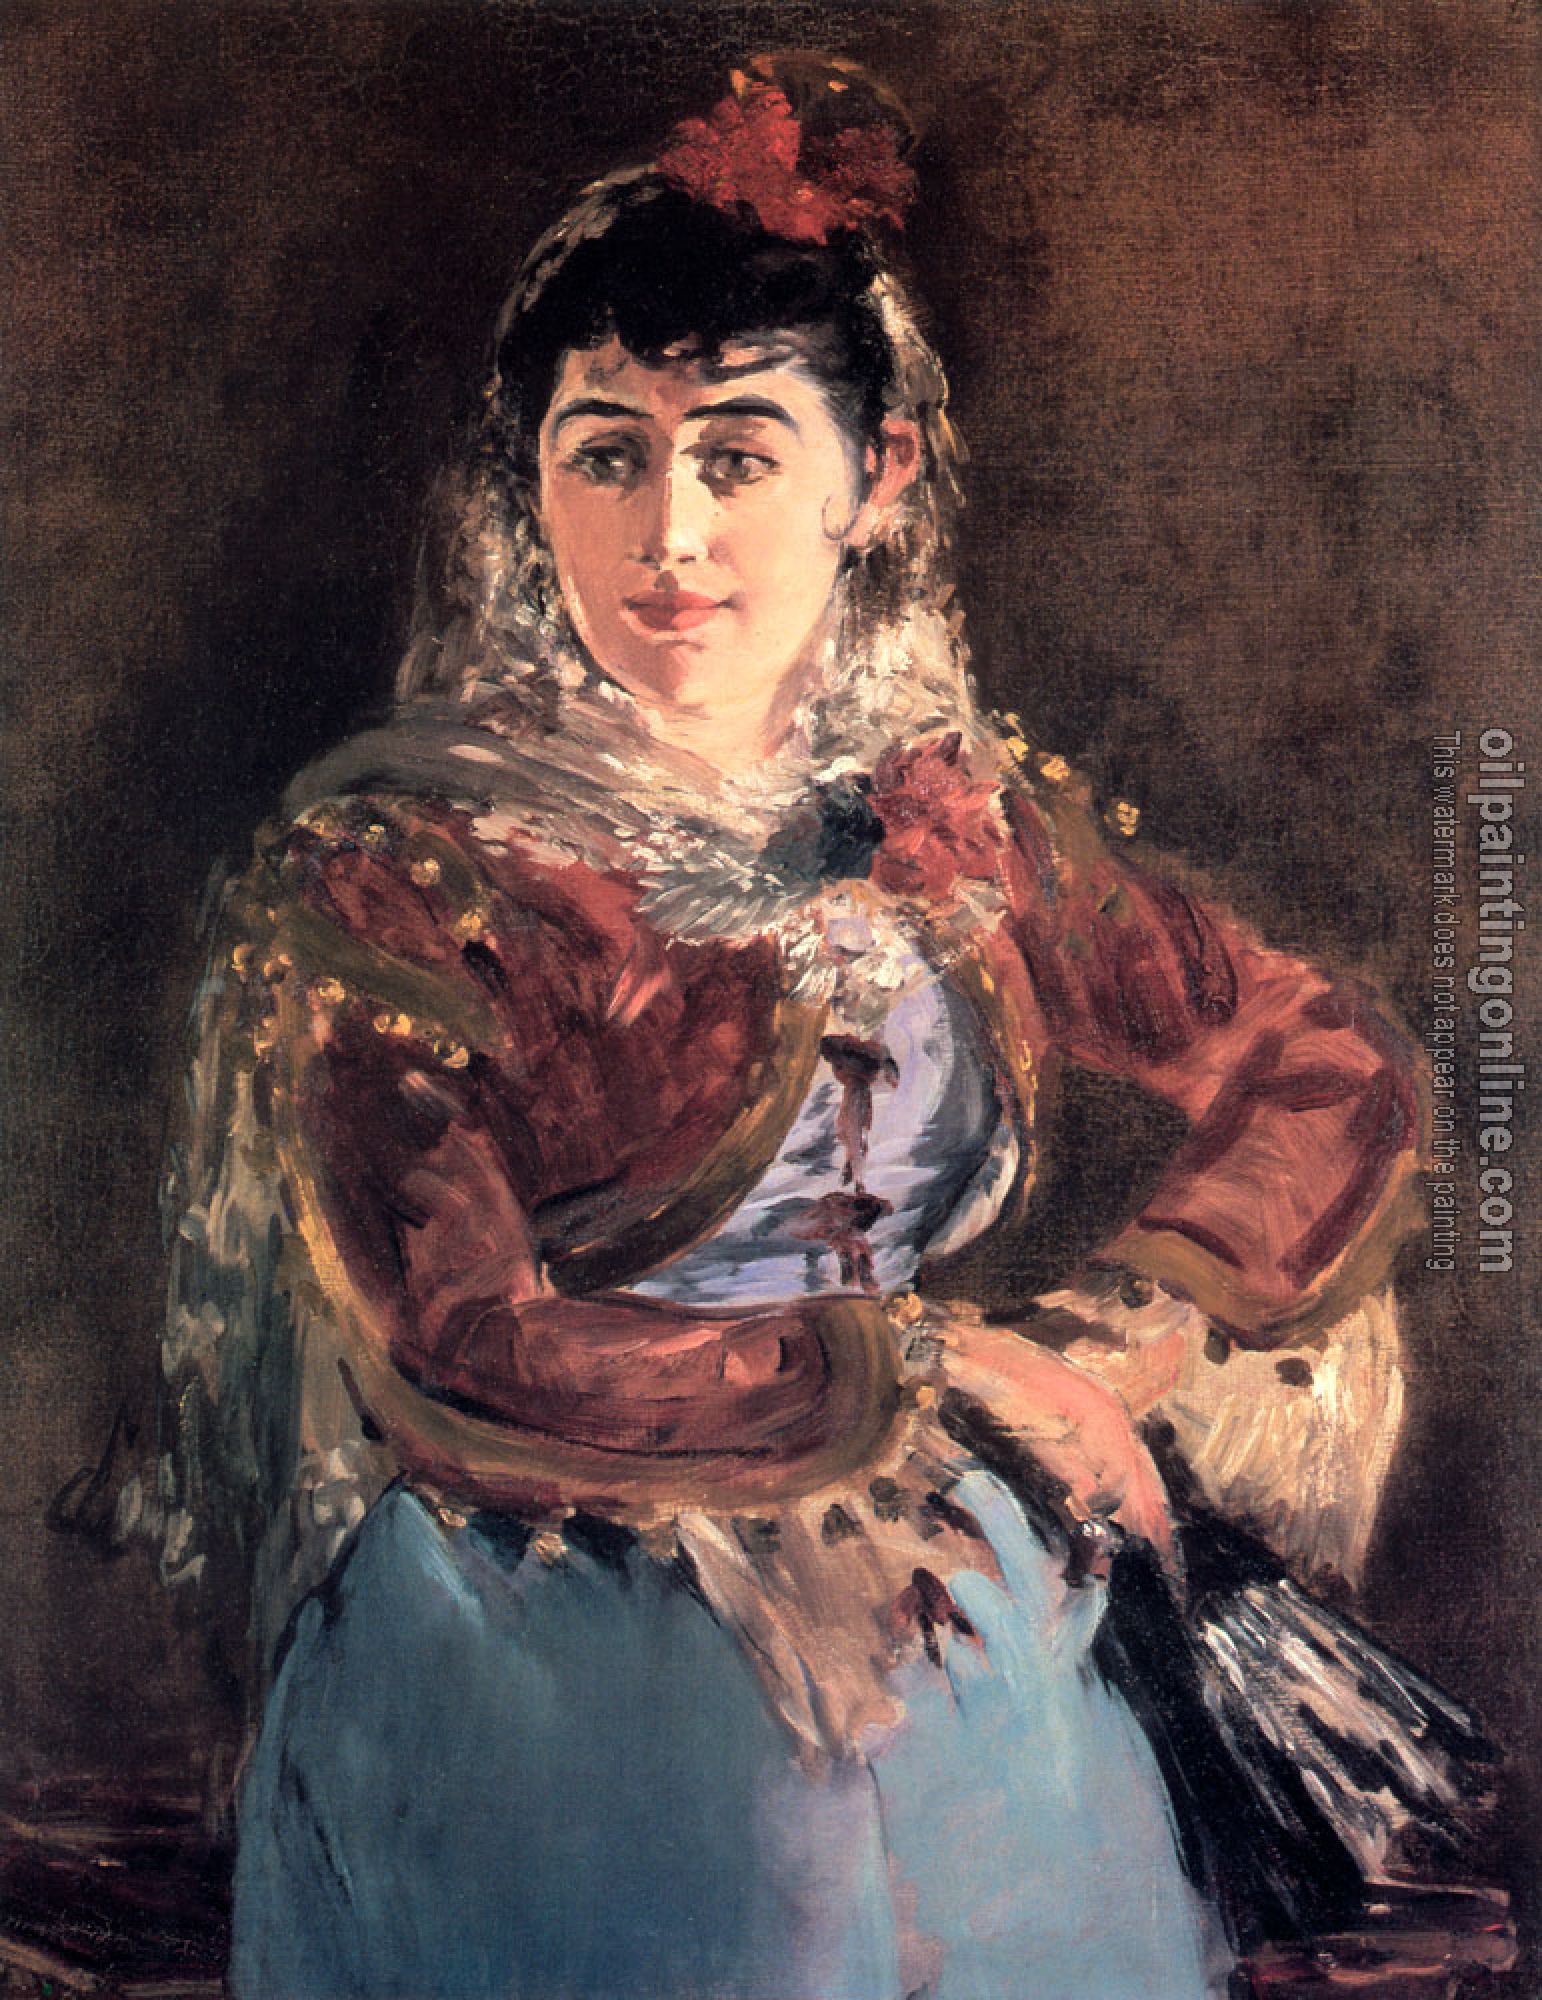 Manet, Edouard - Portrait of Emilie Ambre in the role of Carmen